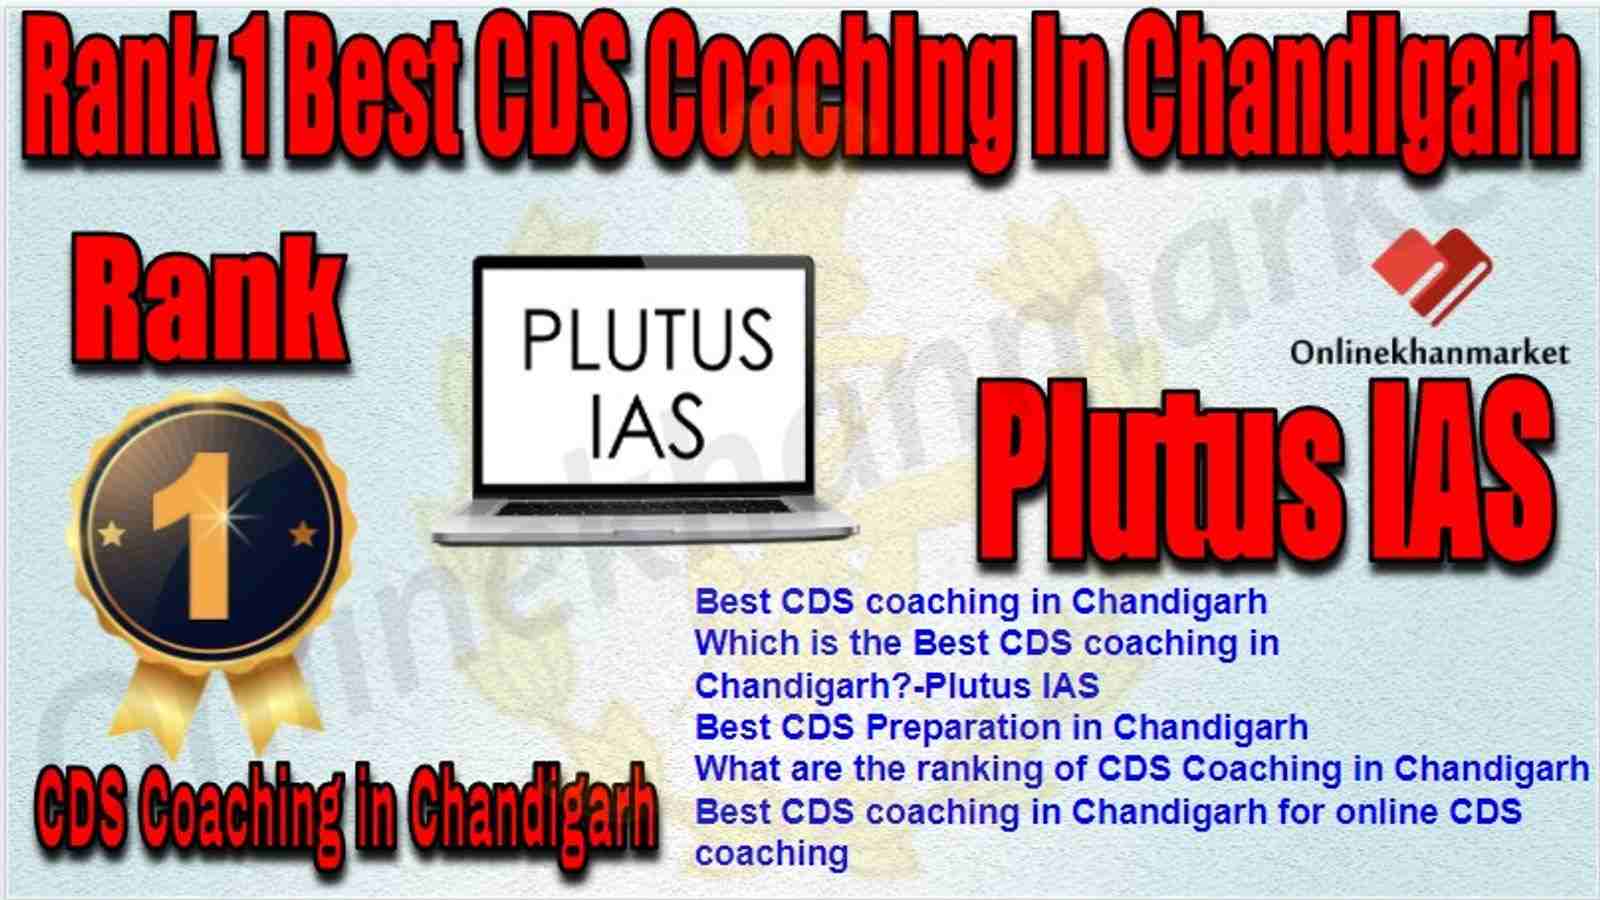 Rank 1 Best CDS Coaching in chandigarh